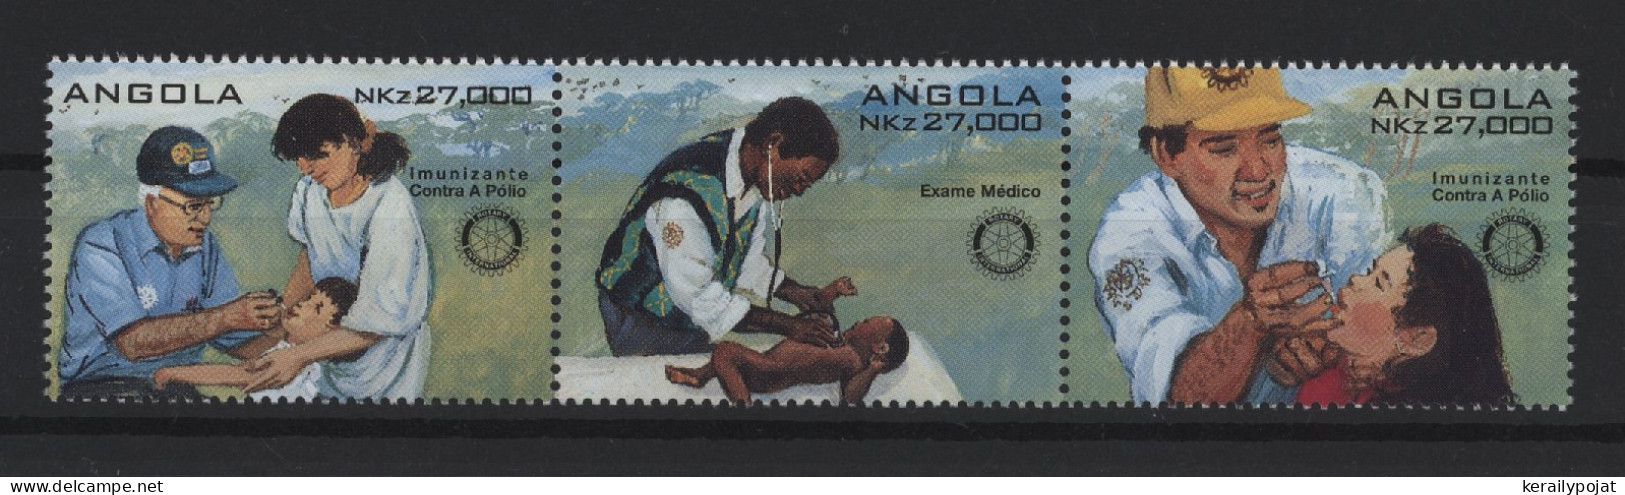 Angola - 2005 Rotary International Strip MNH__(TH-27437) - Angola